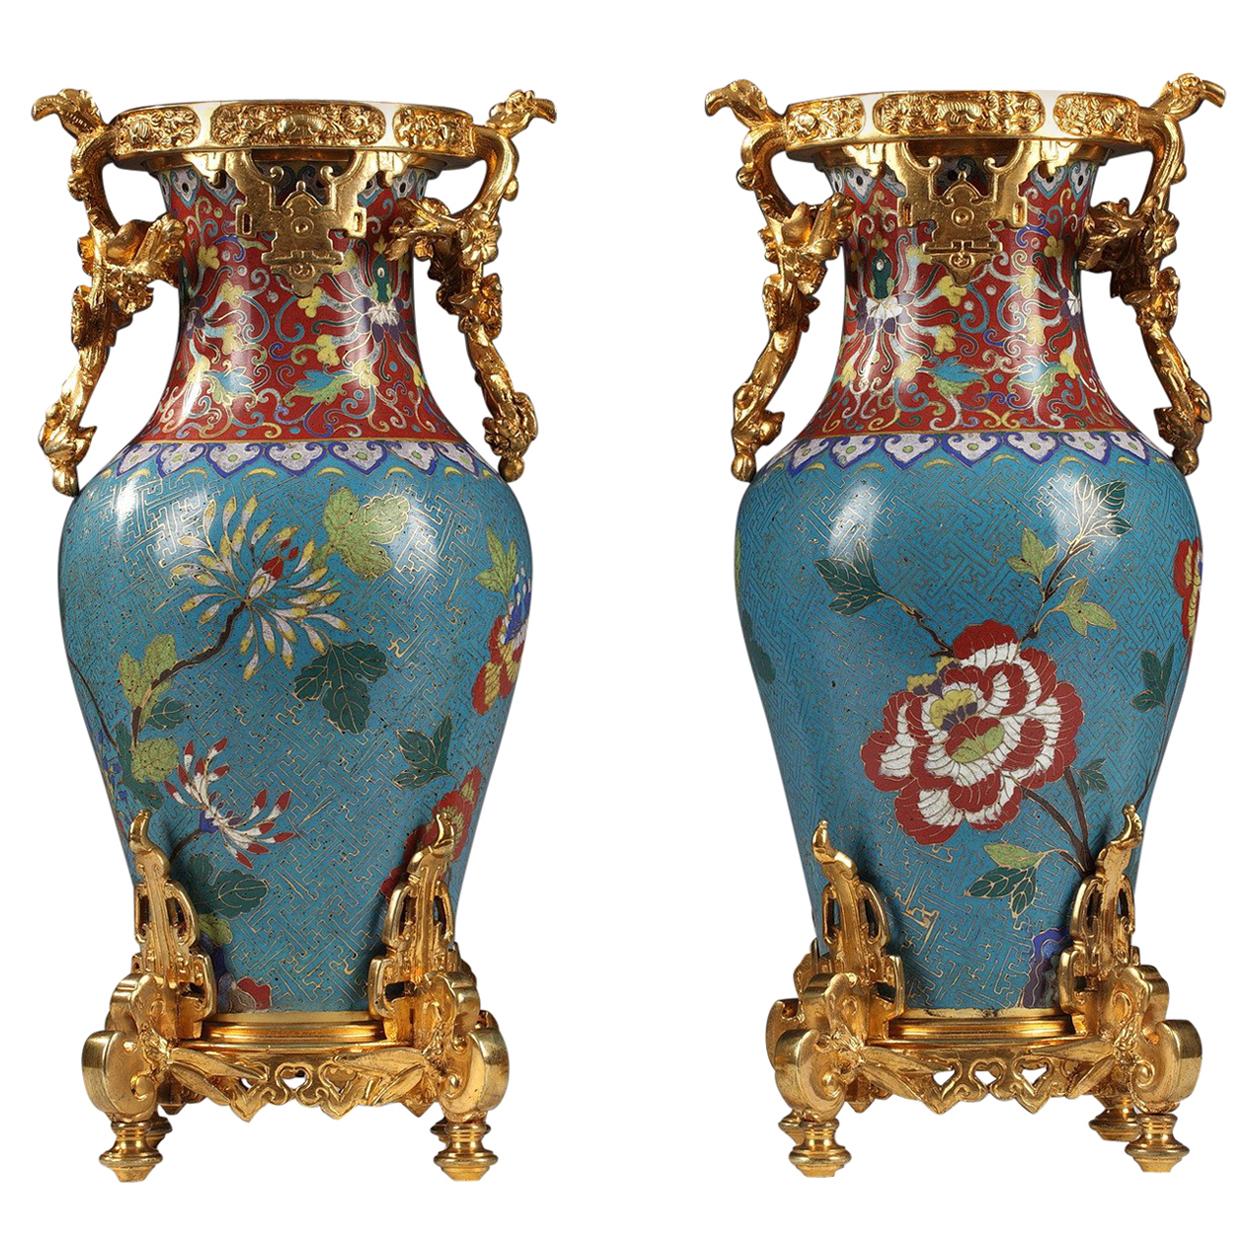 Pair of Chinese Cloisonné Enamel Vases Attributed to L'Escalier de Cristal